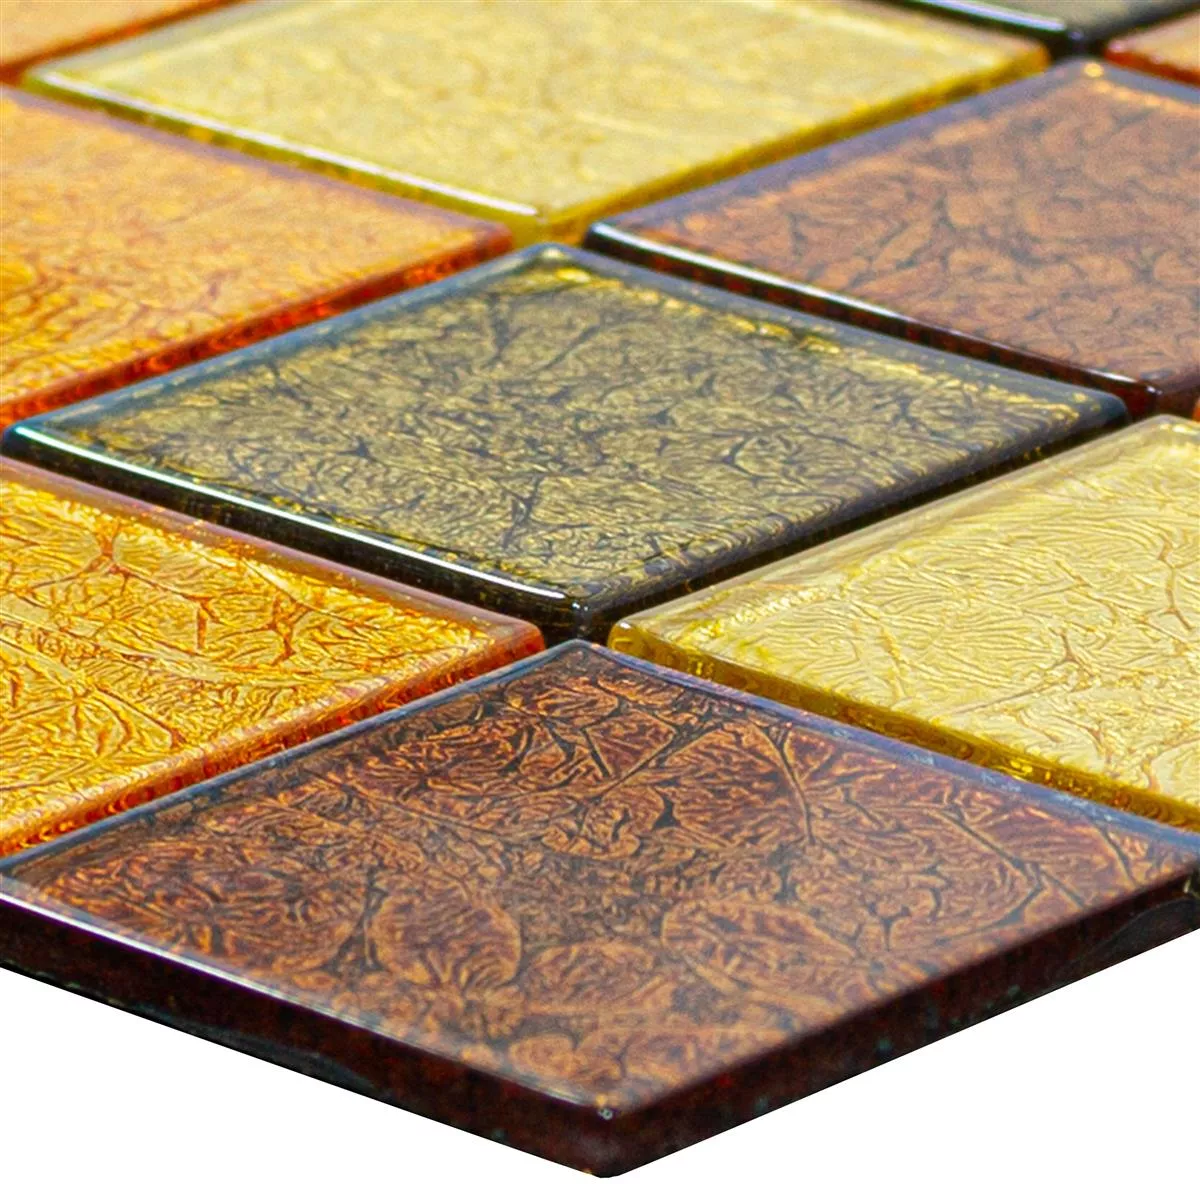 Glass Mosaic Tiles Curlew Yellow Orange Q48 4mm